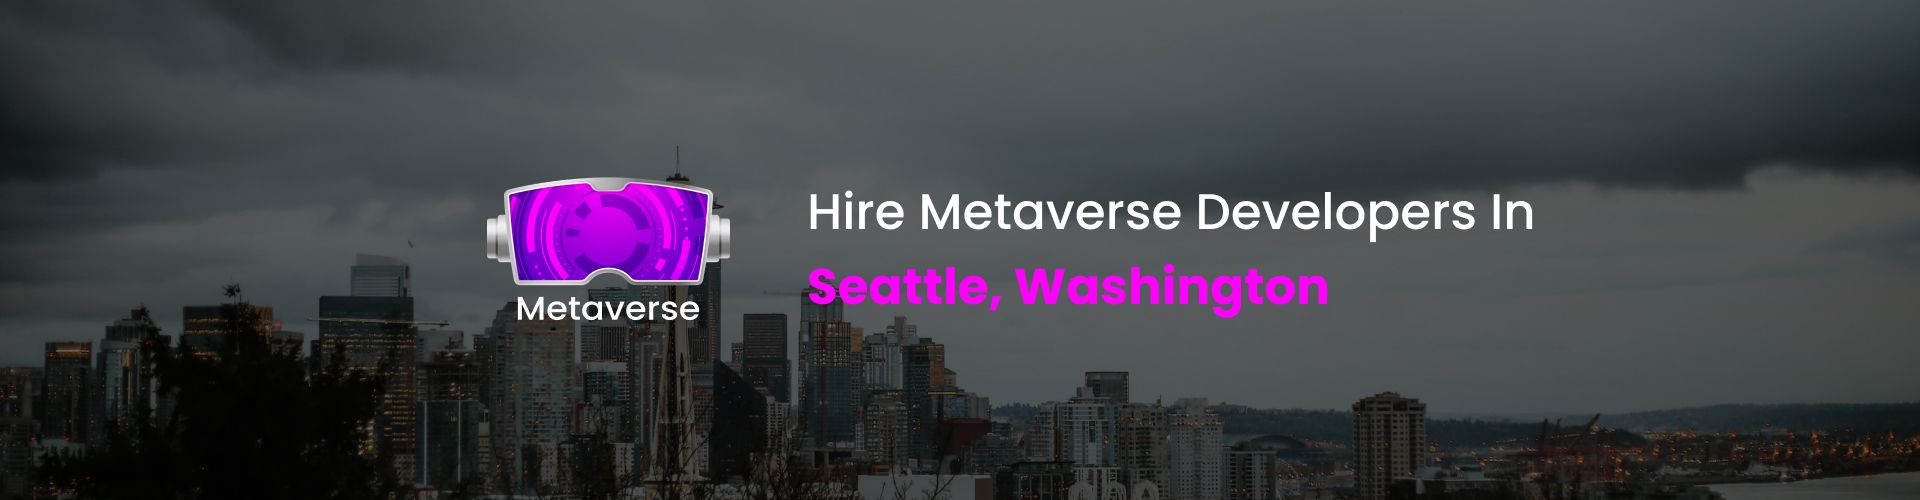 hire metaverse developers in seattle, washington